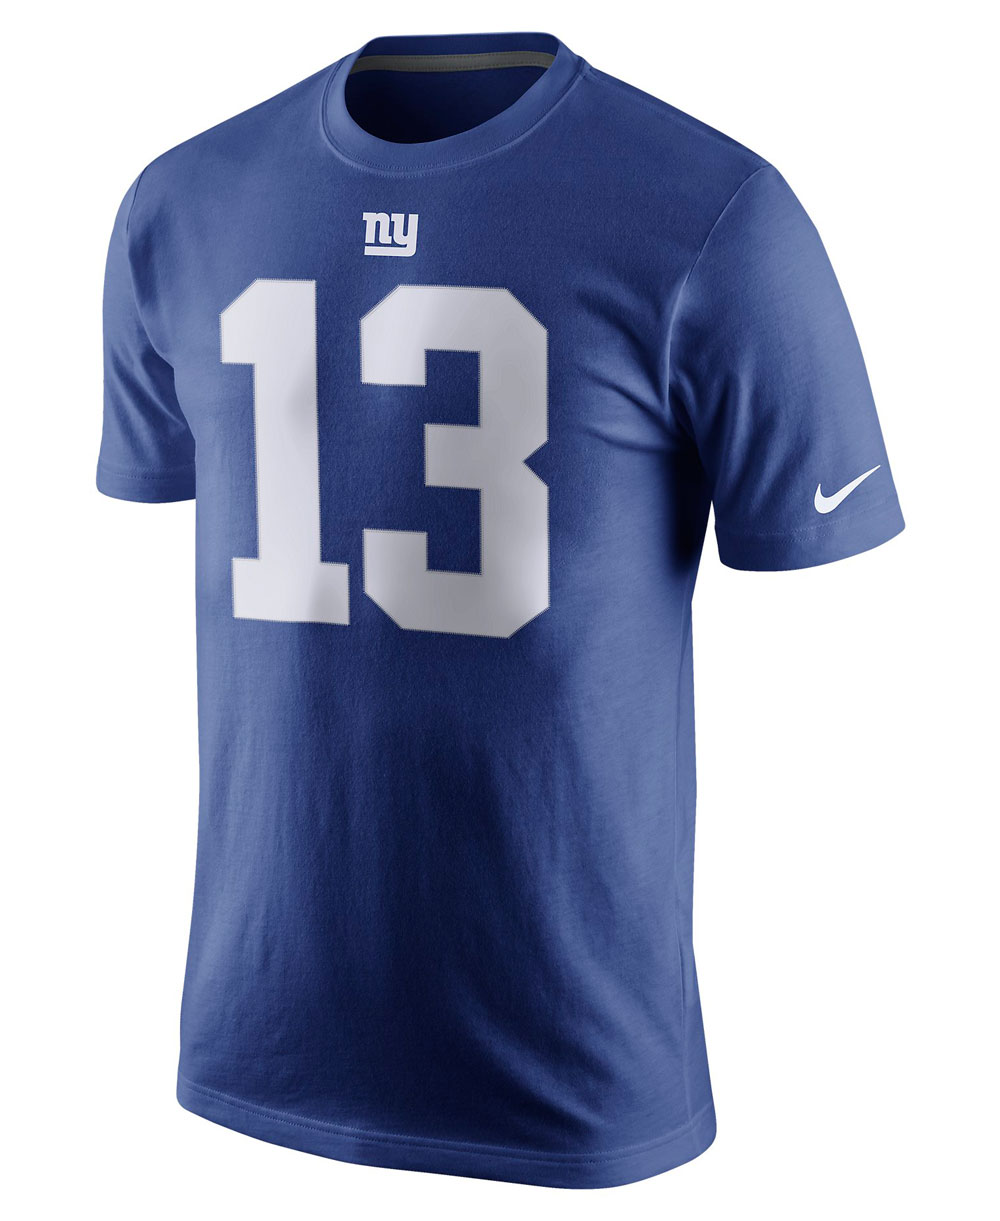 Leonardoda Condimento Inspección Nike Player Pride Name and Number Camiseta para Hombre NFL Giants /...